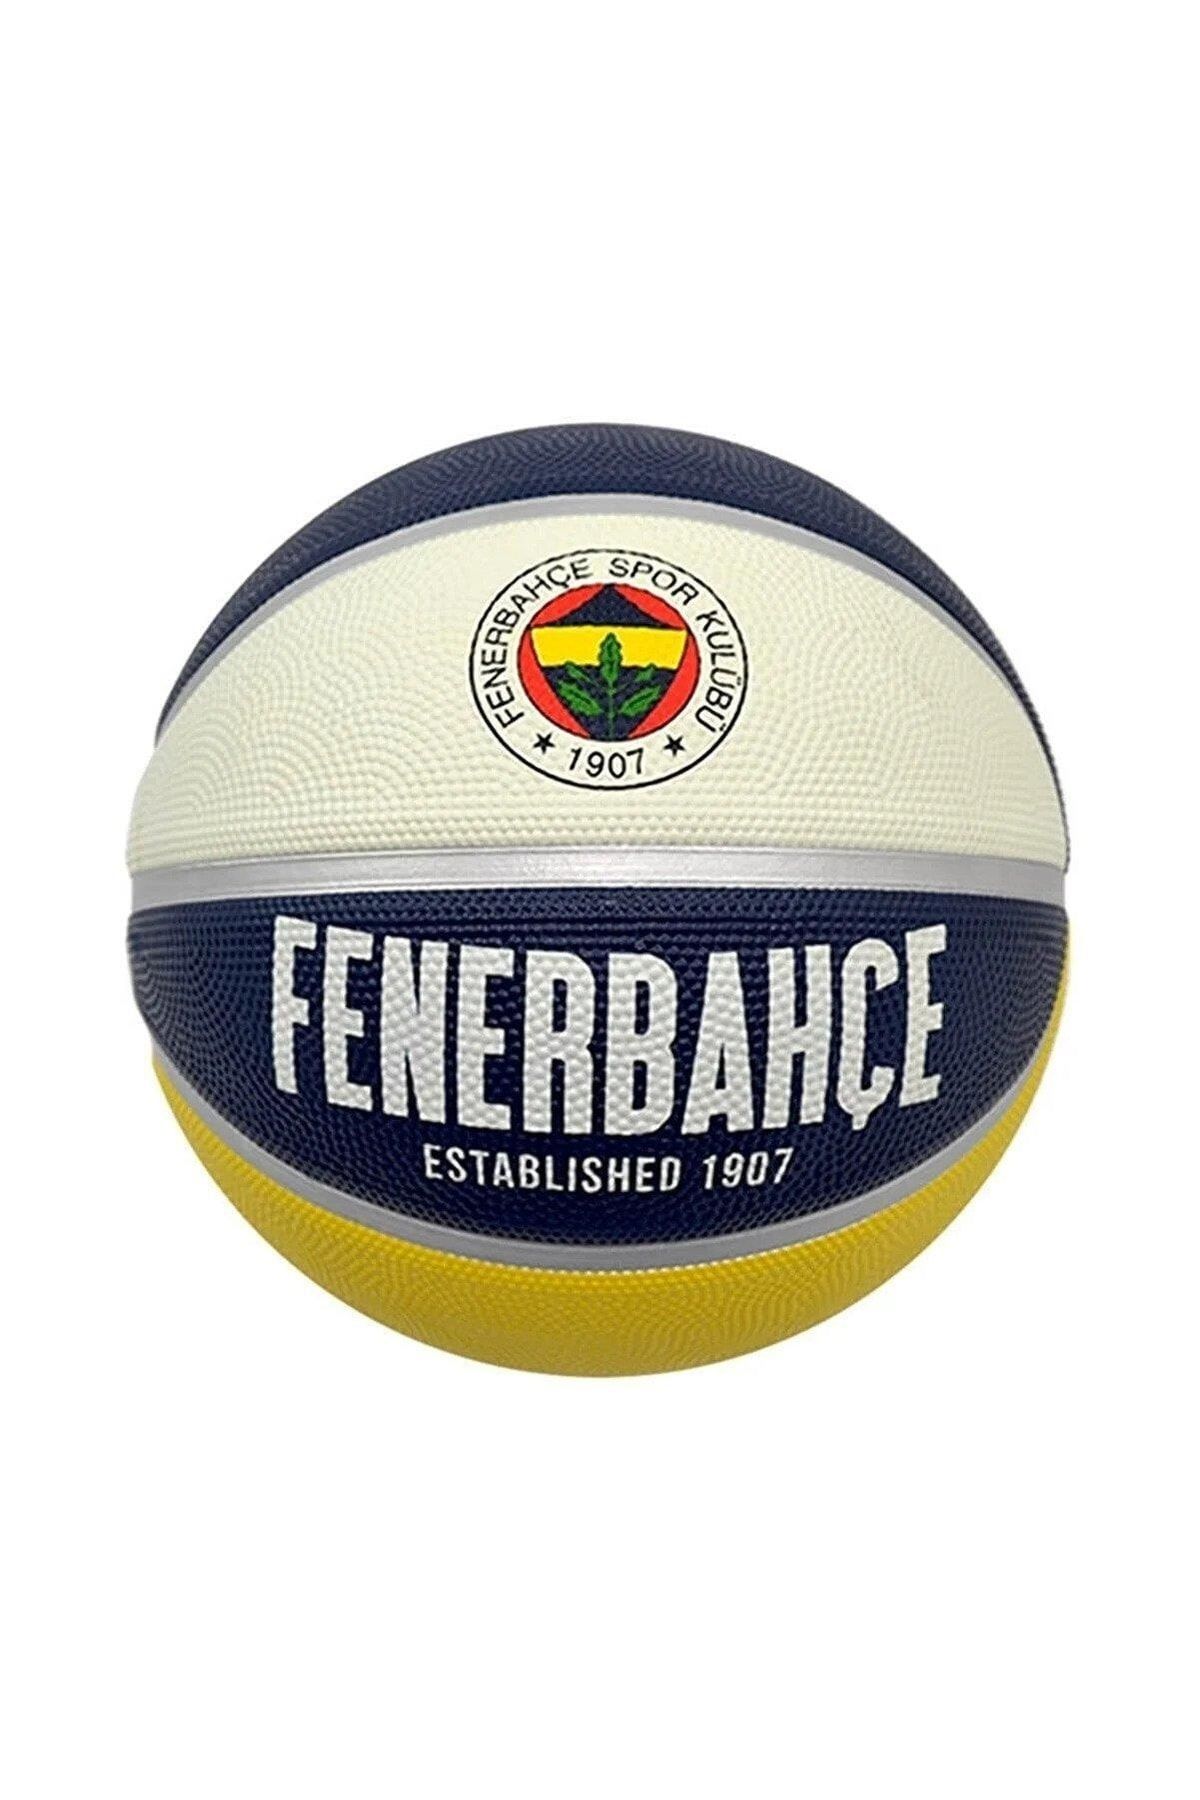 Fenerbahçe Highline Basketbol Topu No:7 Basketbol Topu